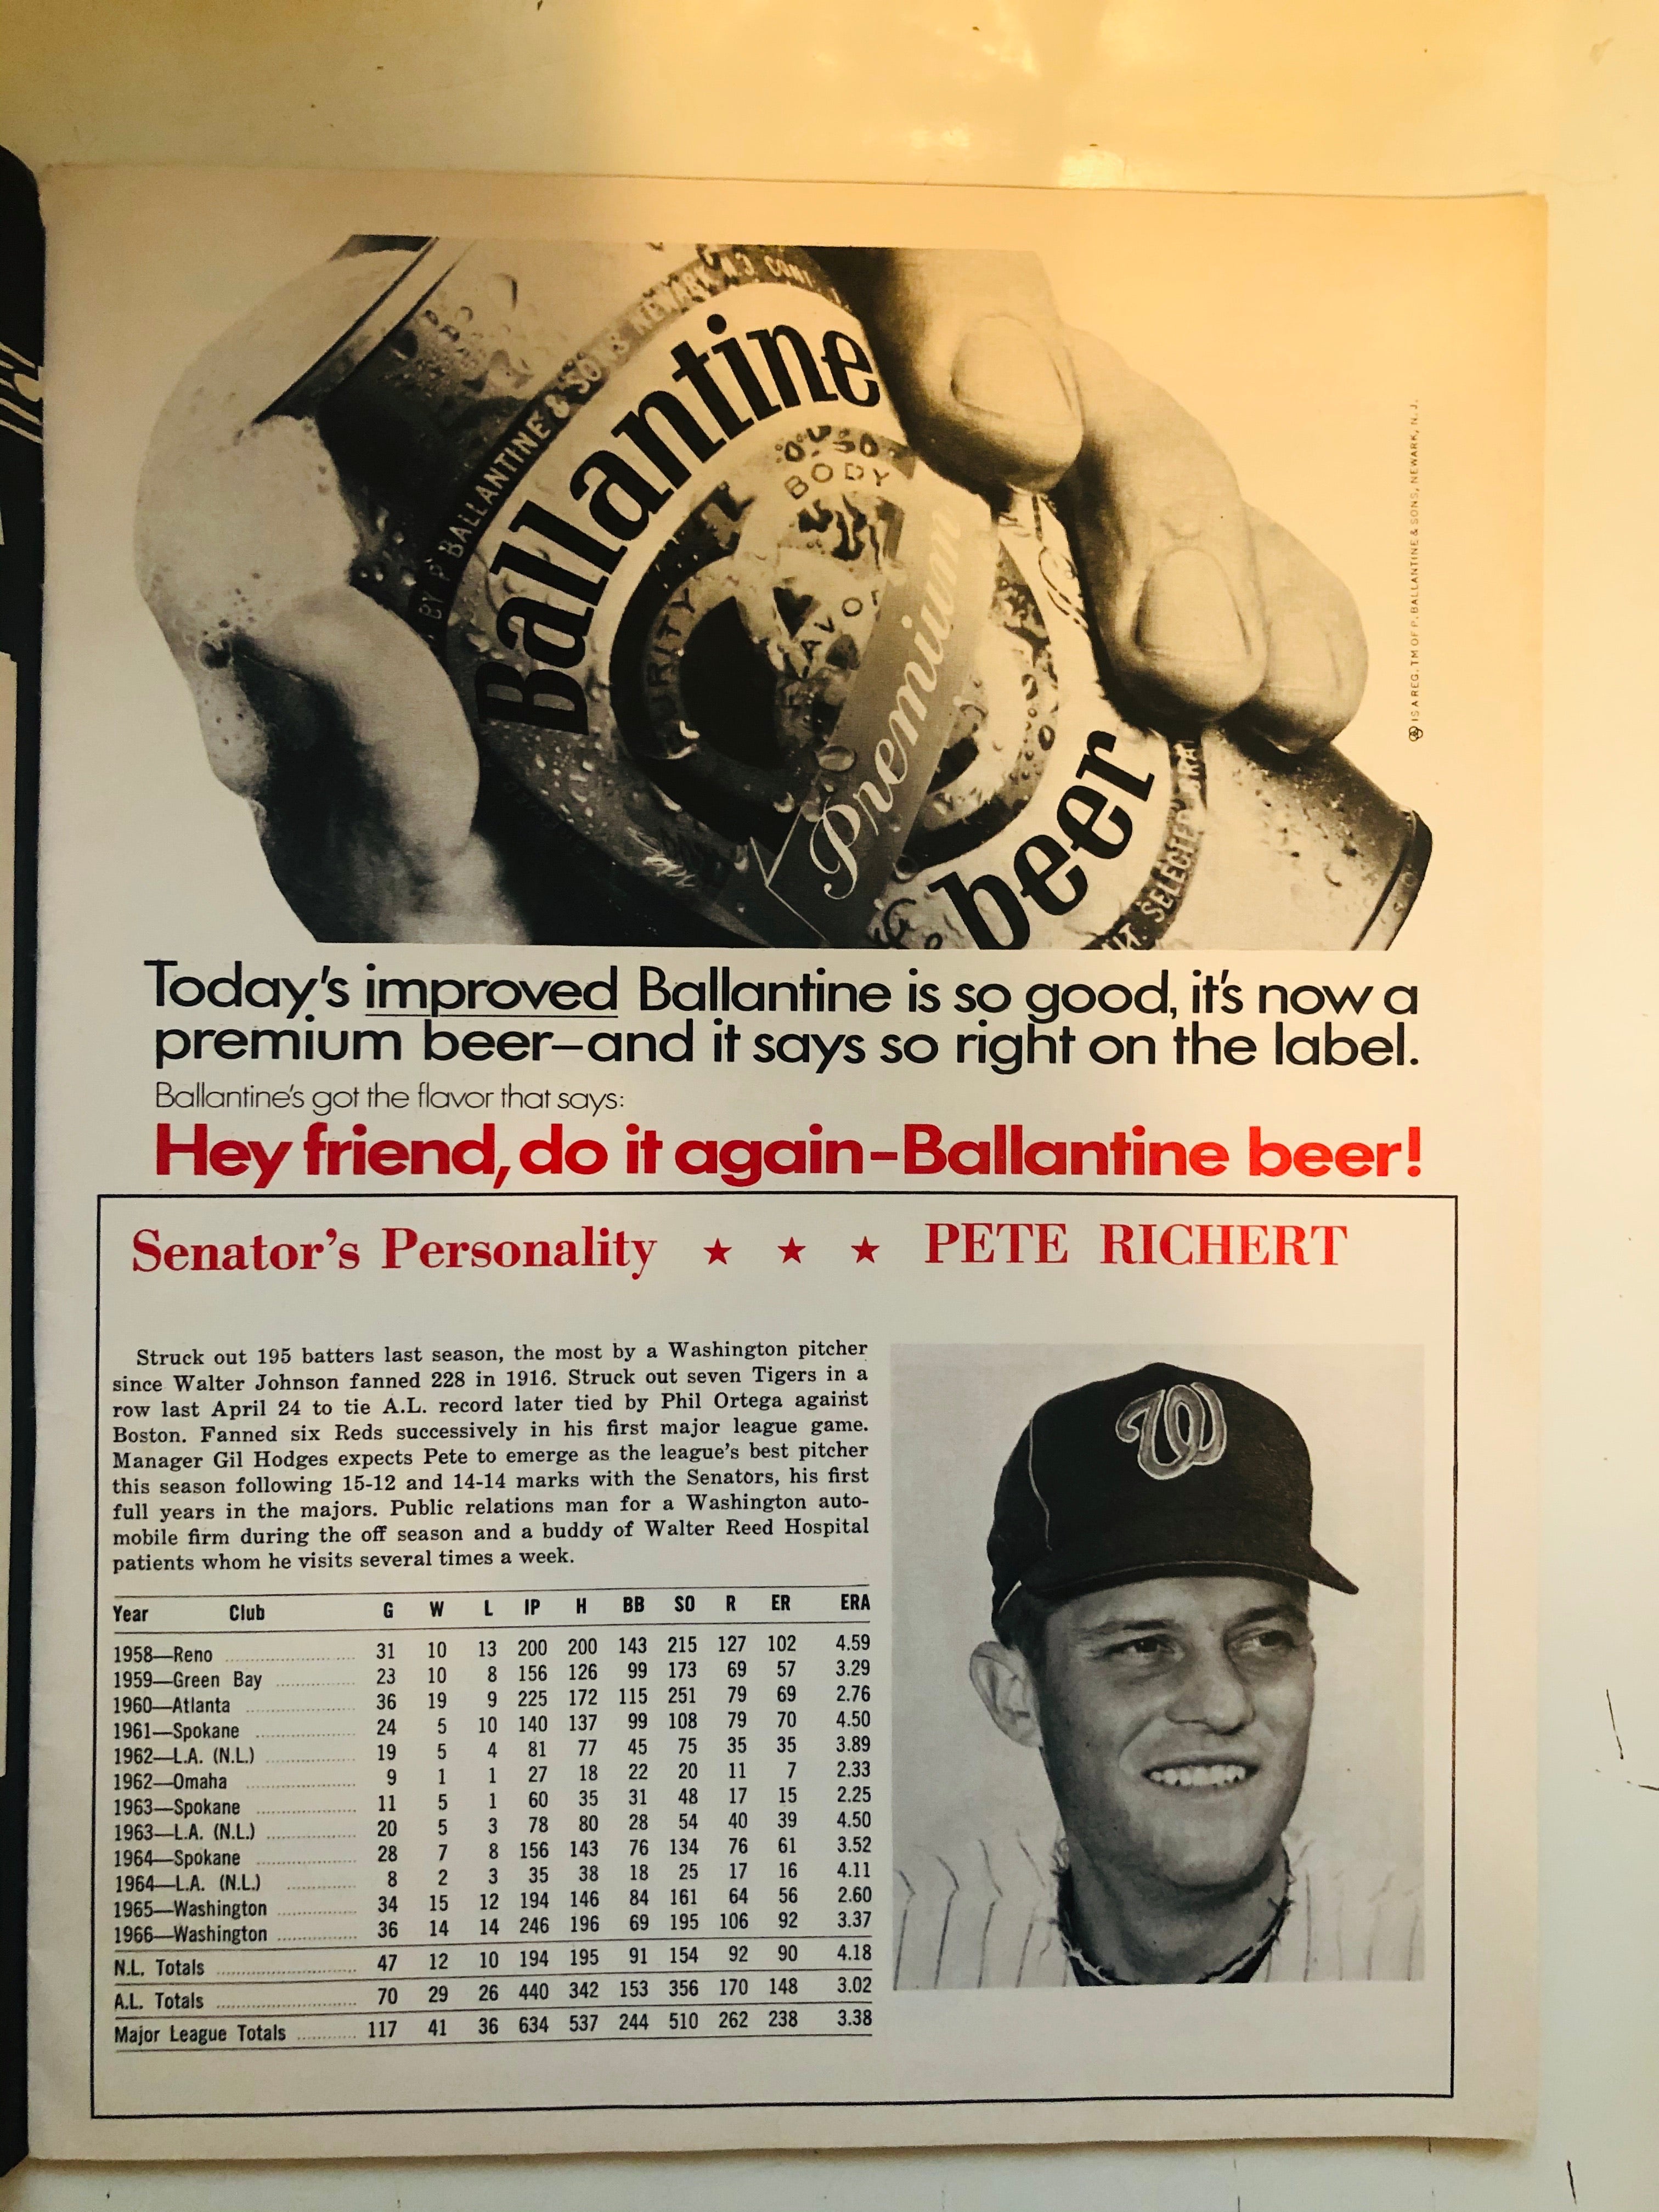 The Senators baseball team rare scorecard program 1967